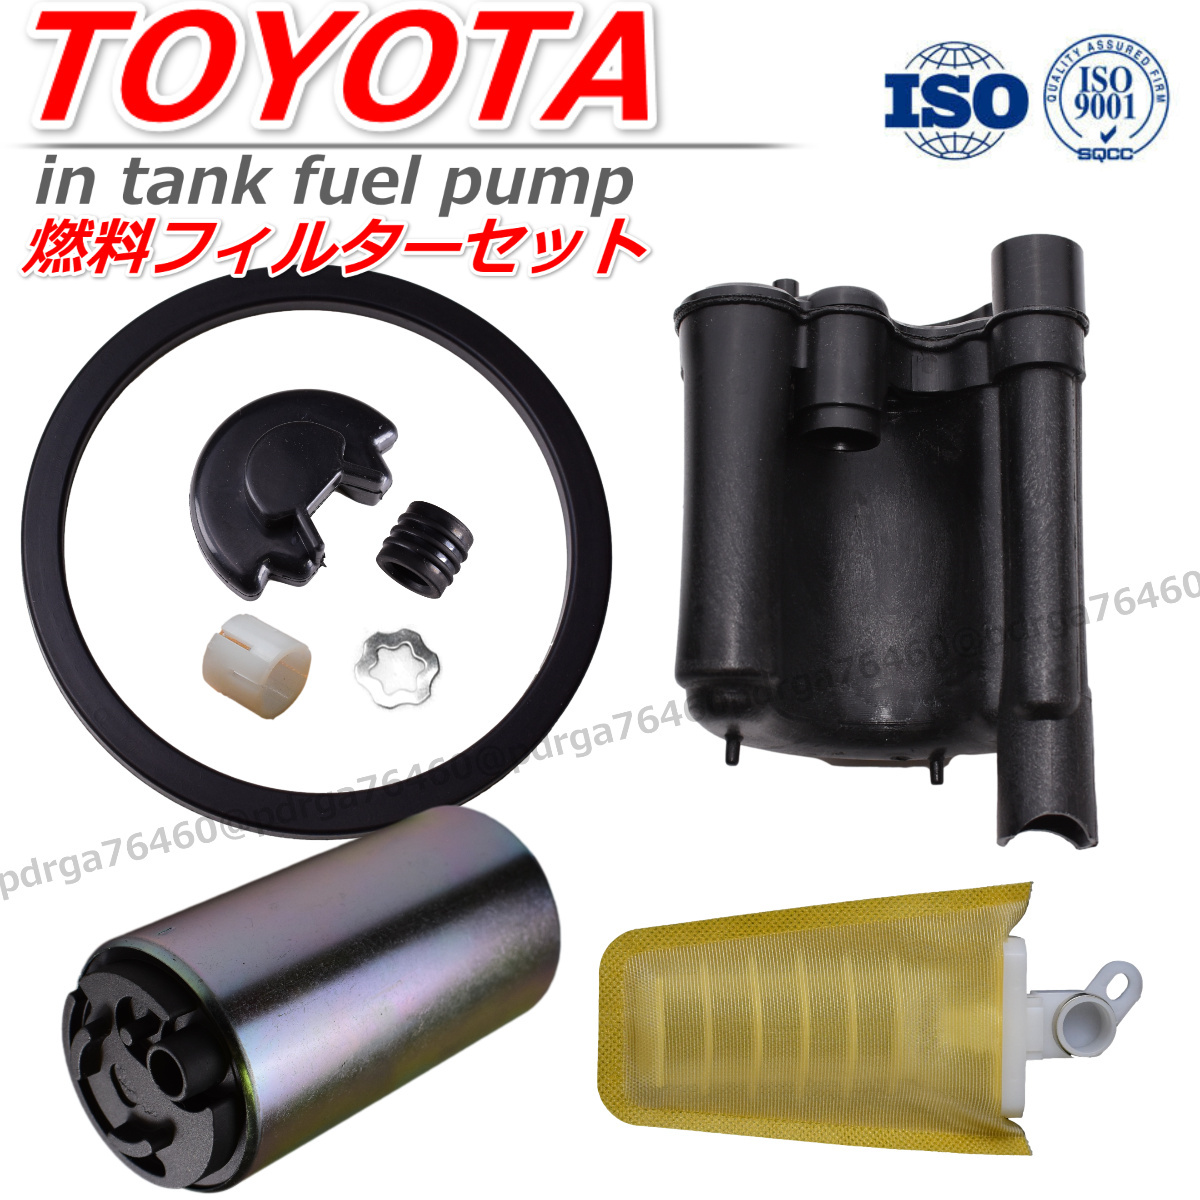  new goods guarantee Toyota Camry Gracia SXV25 filter gasket strainer fuel pump fuel pump gasket 23300-74330